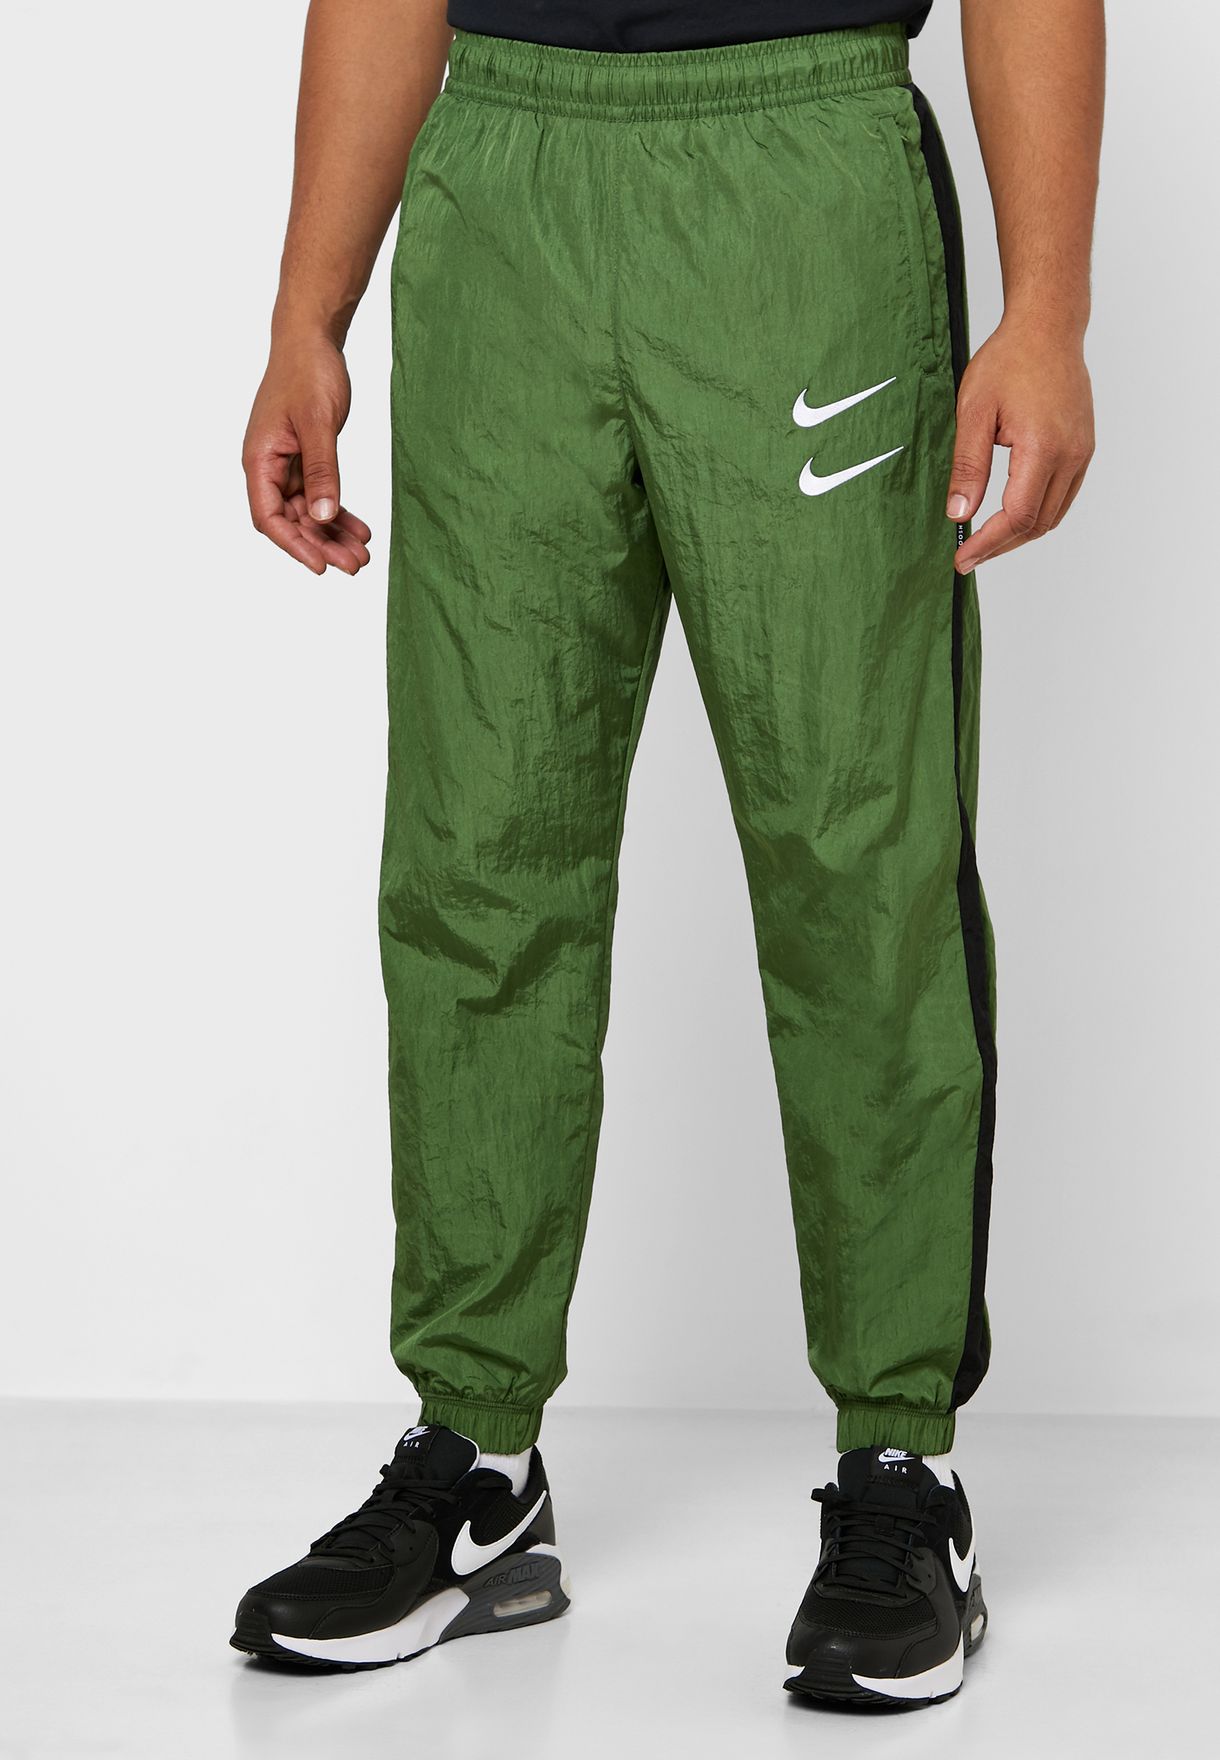 nike green sweatpants